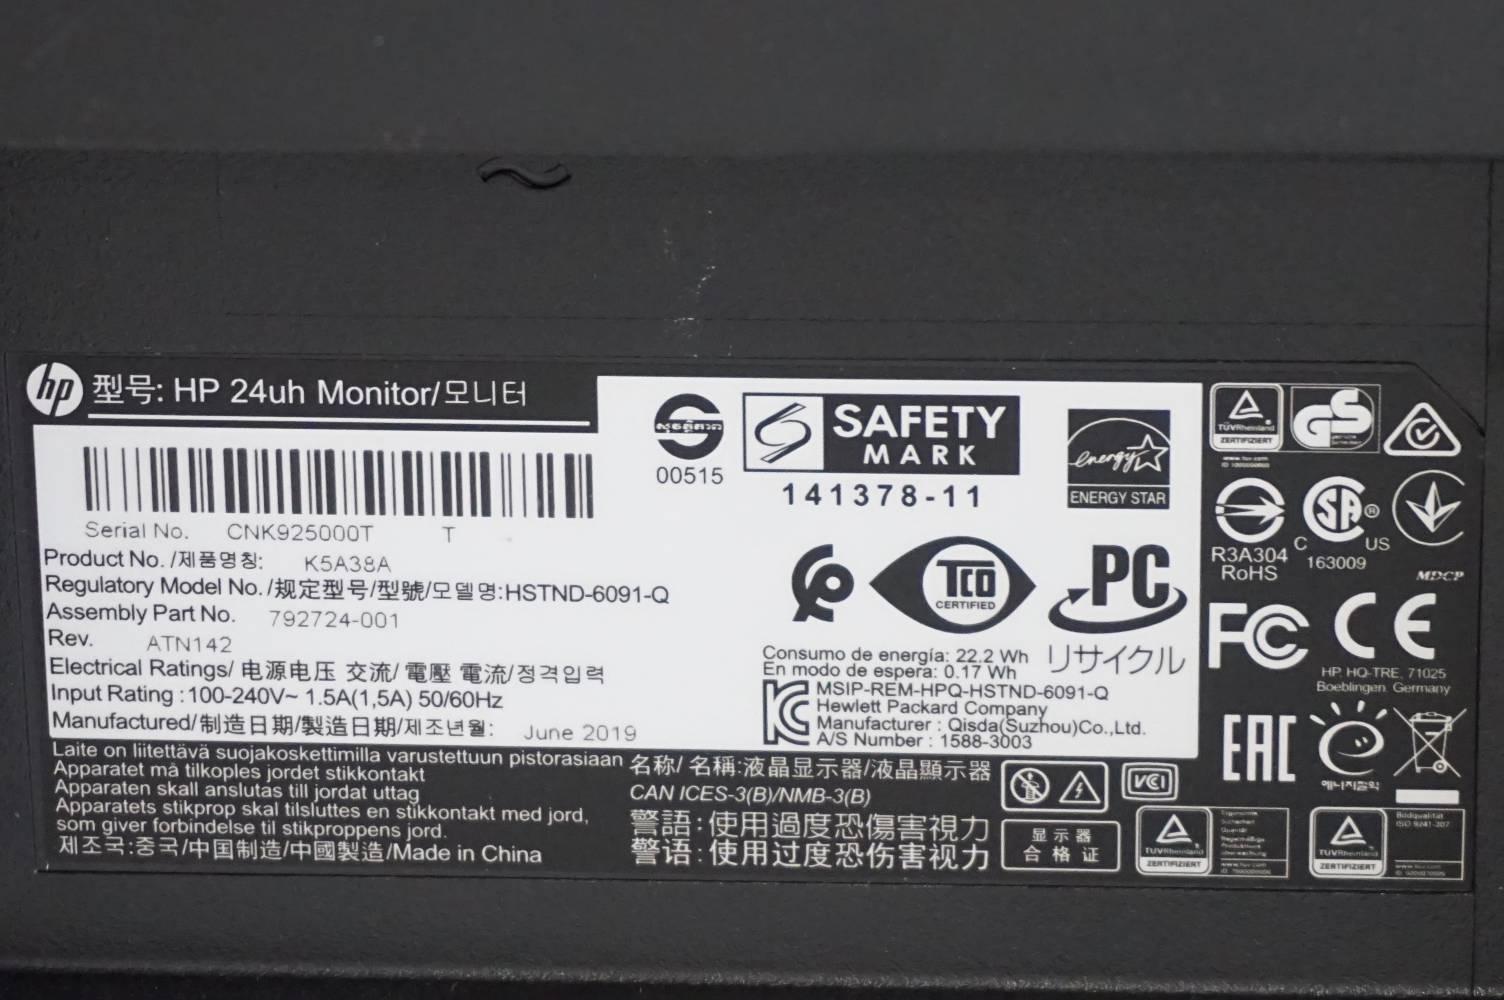 HP 24" Monitor (Ser#5000T)